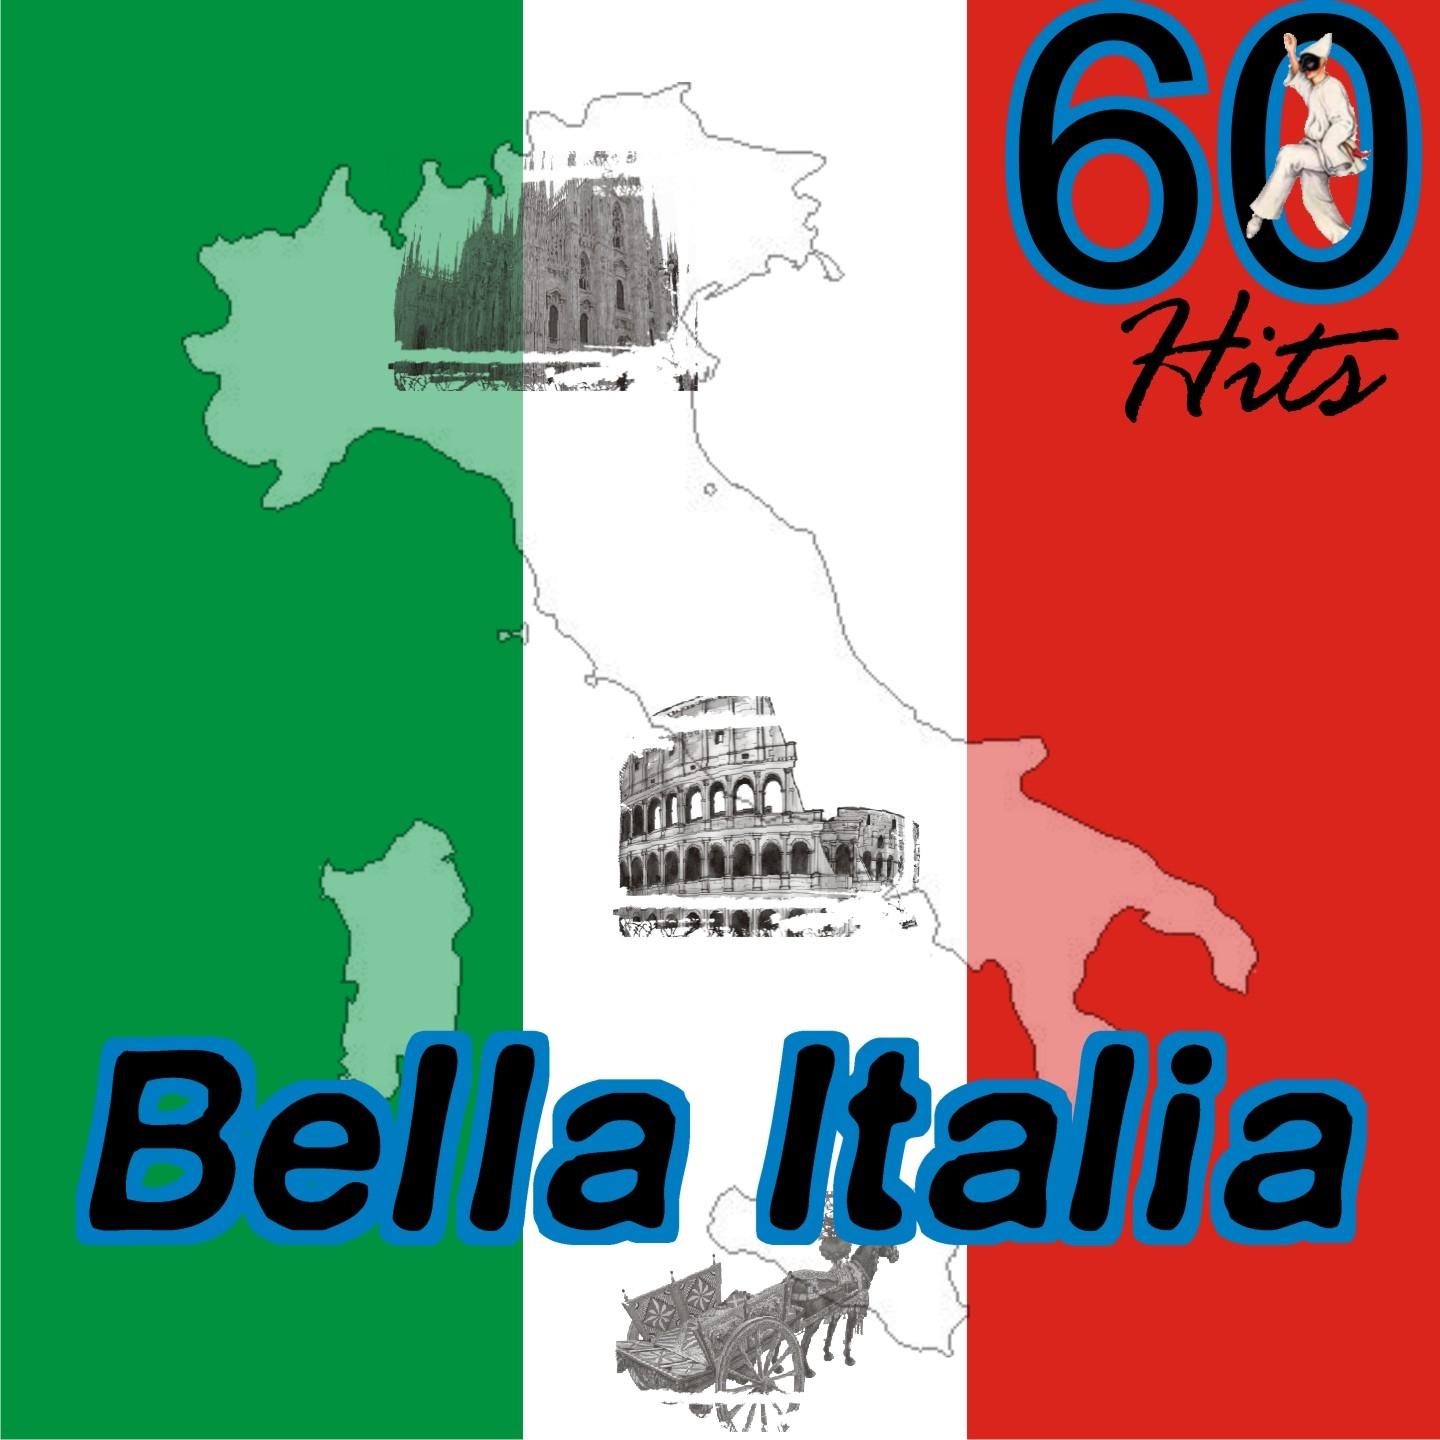 Bella Italia 60 Hits